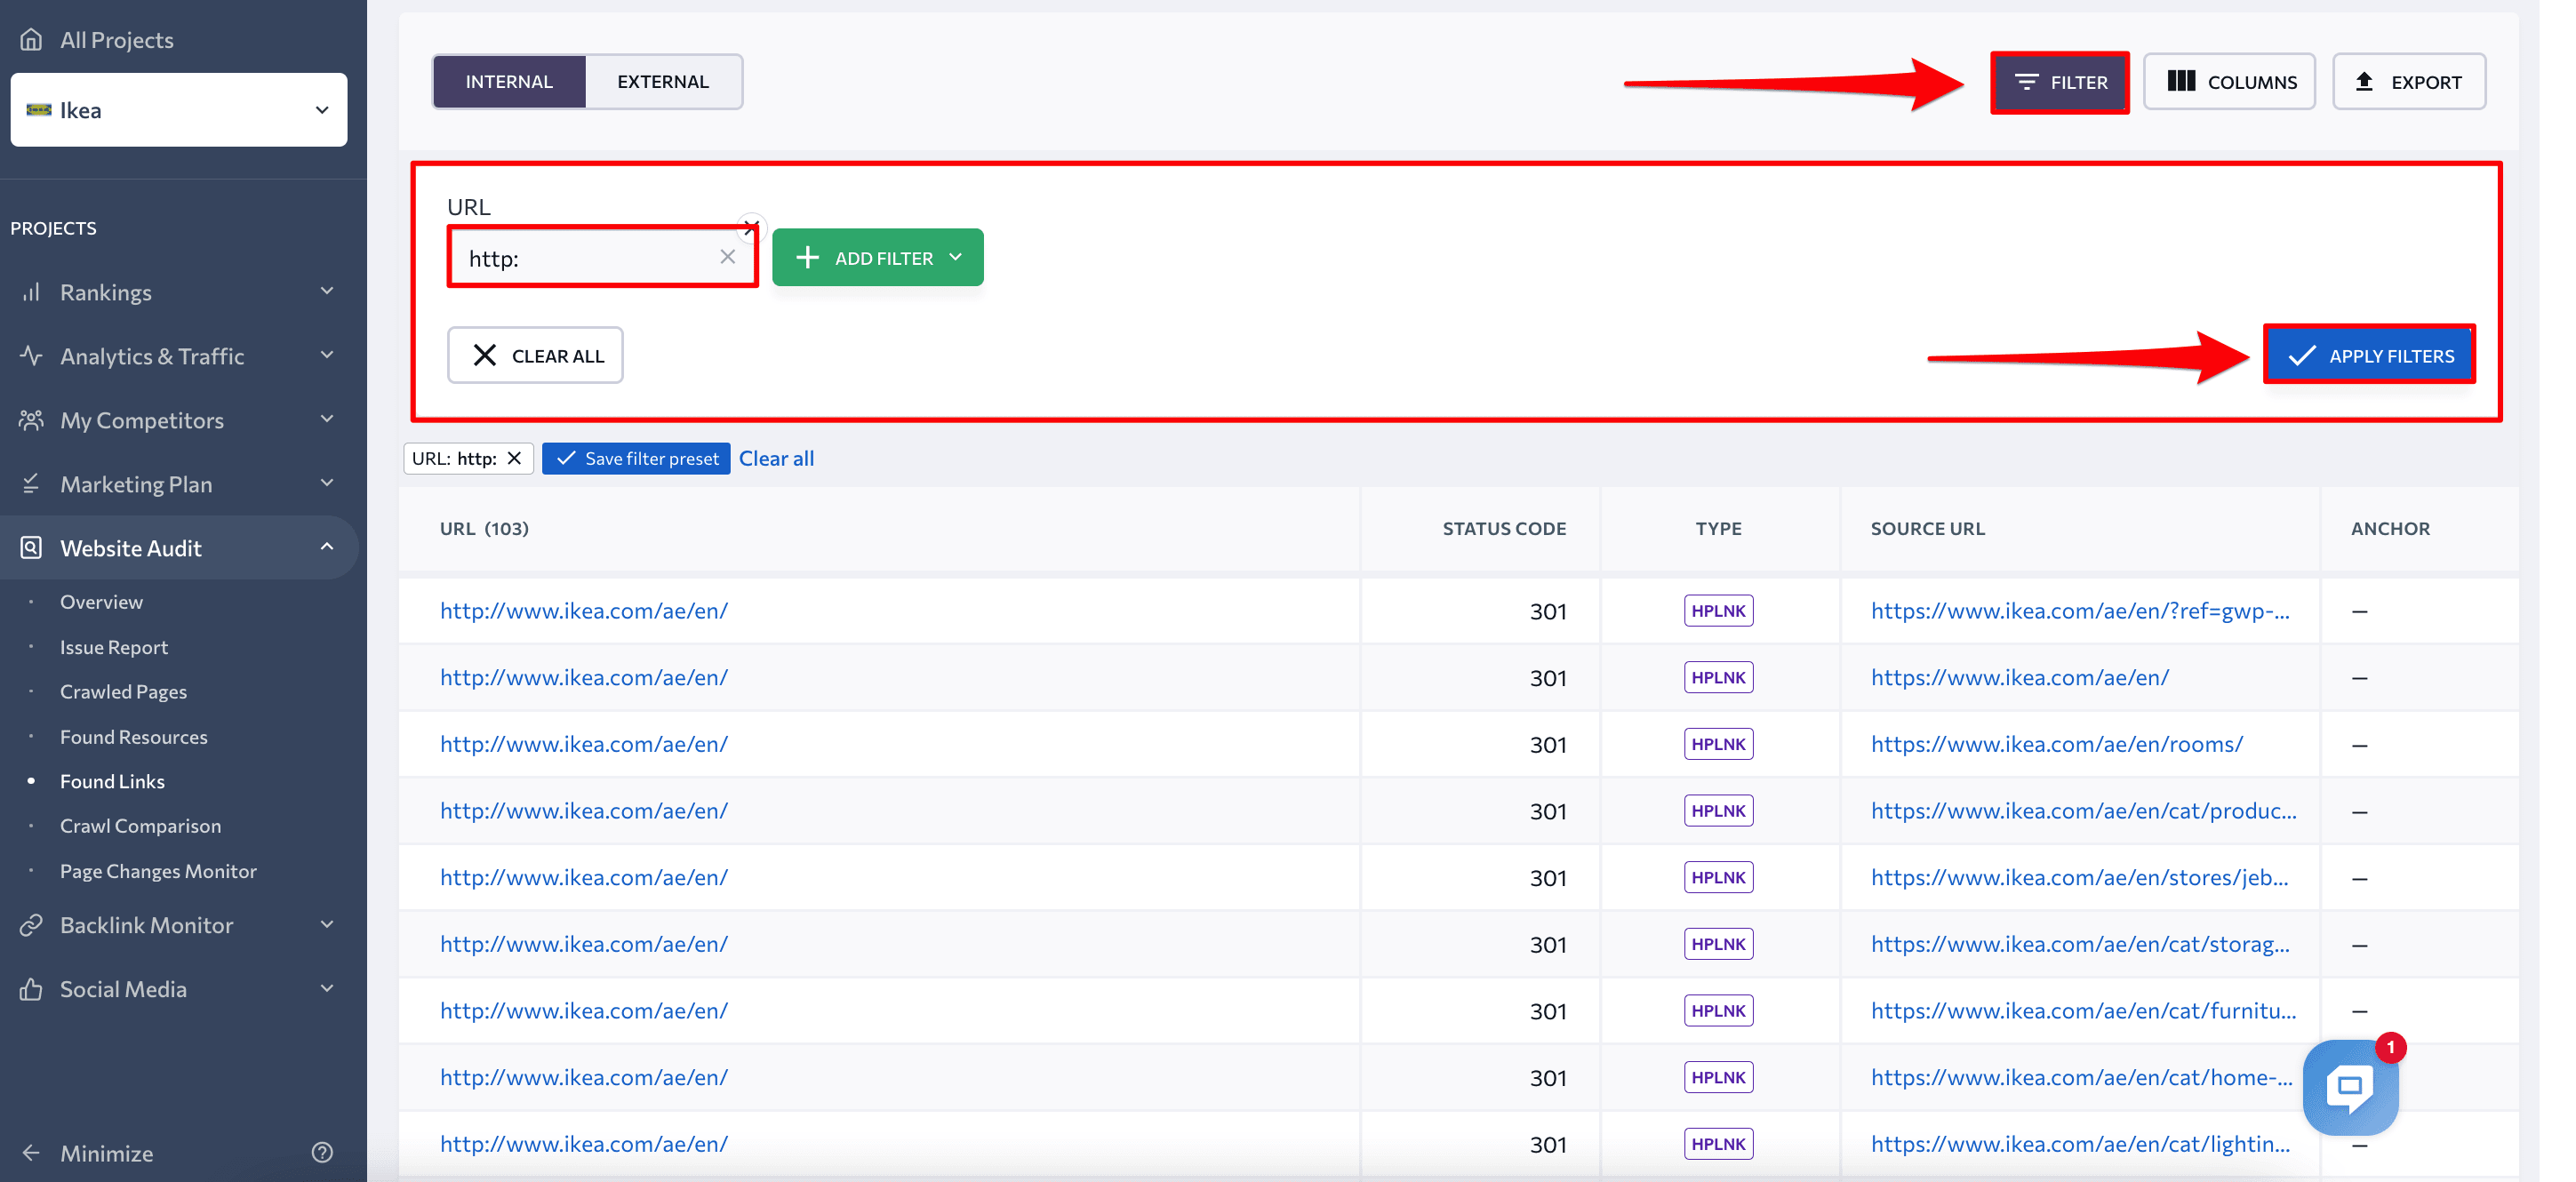 The list of HTTP URLs in SE Ranking